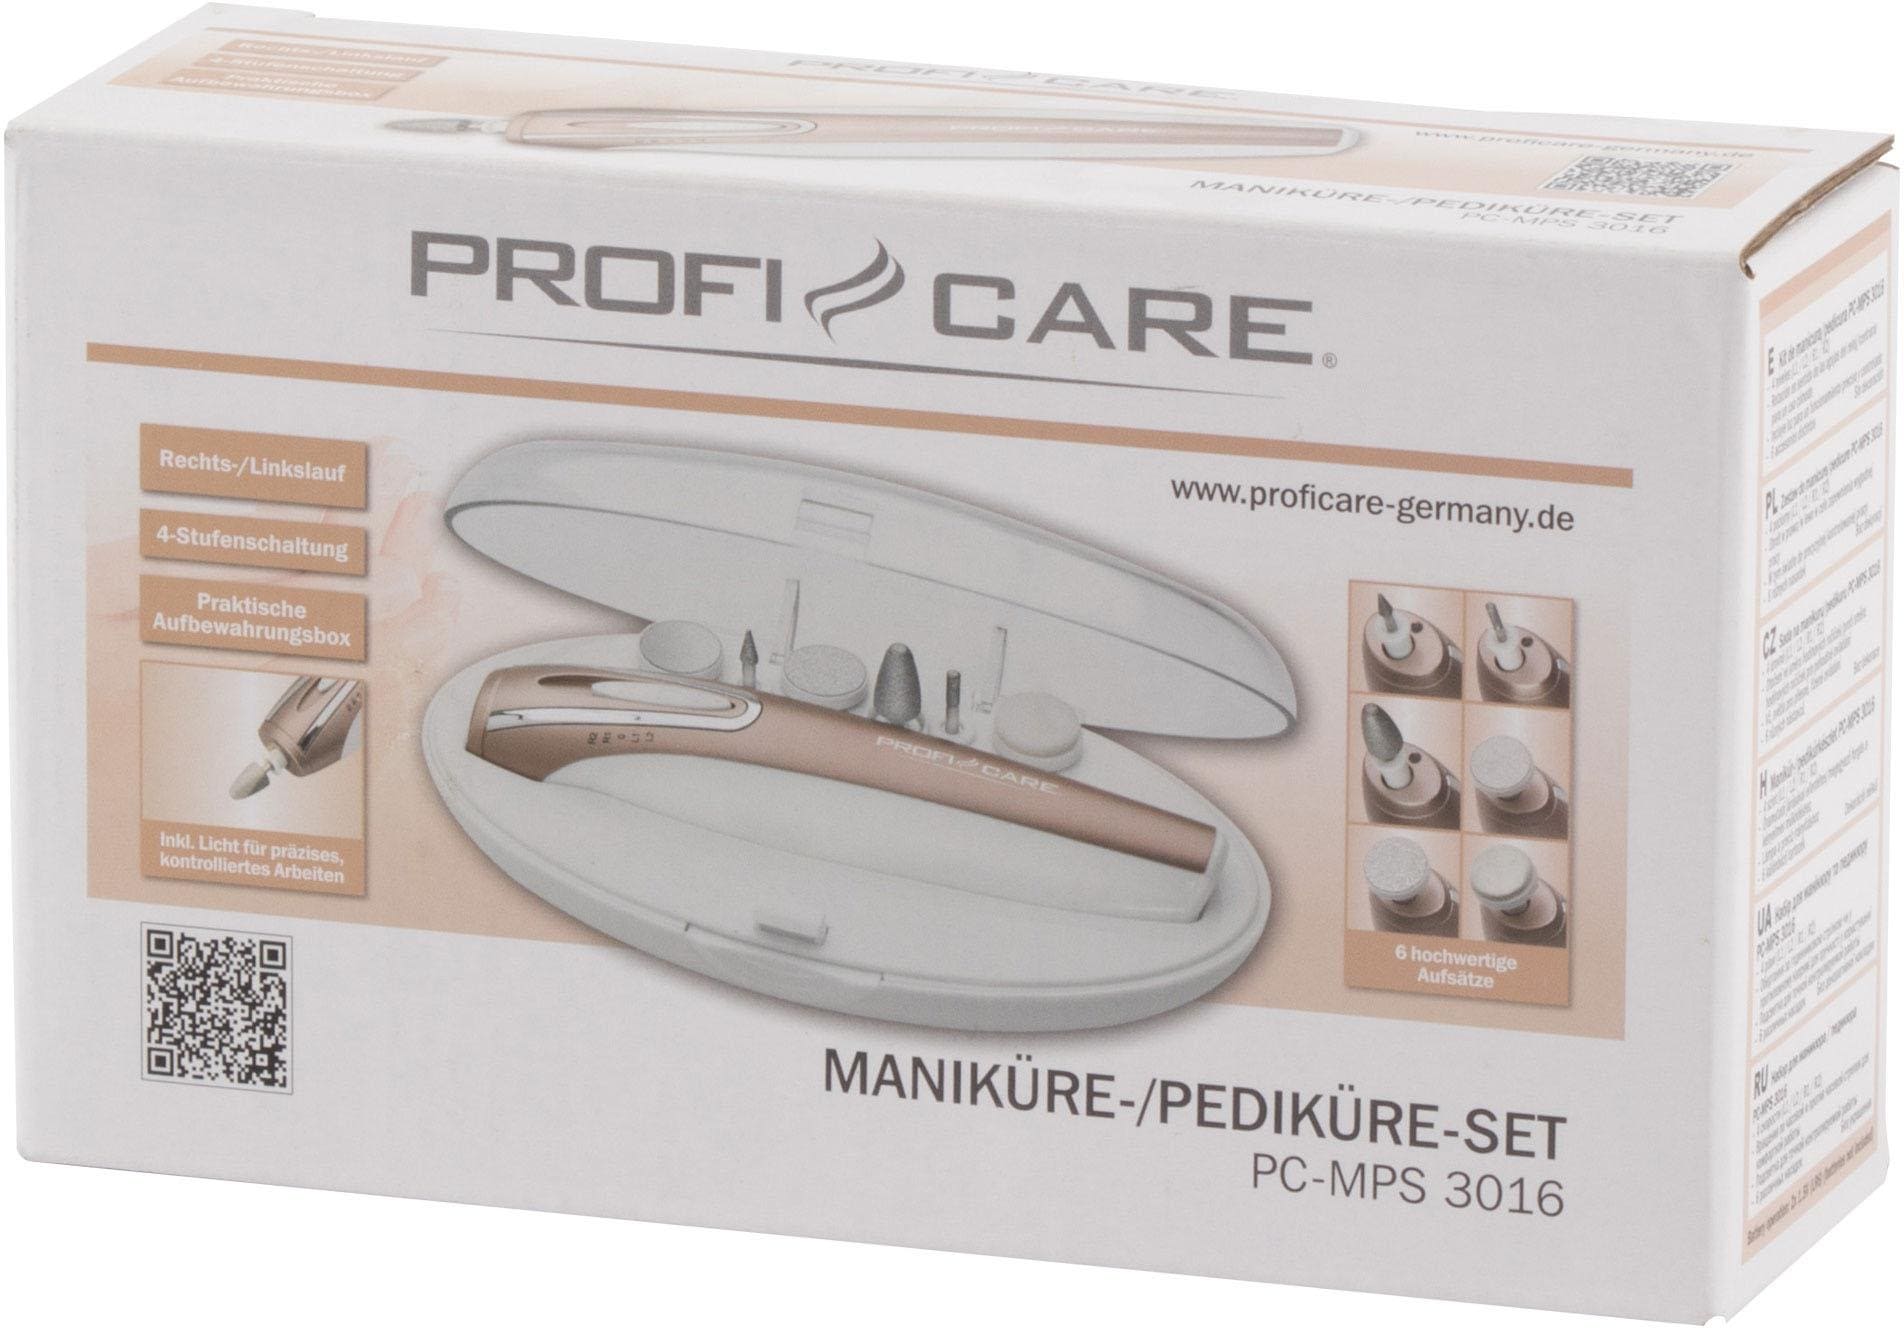 ProfiCare Maniküre-Pediküre-Set »PC-MPS 3016« bei OTTO kaufen jetzt